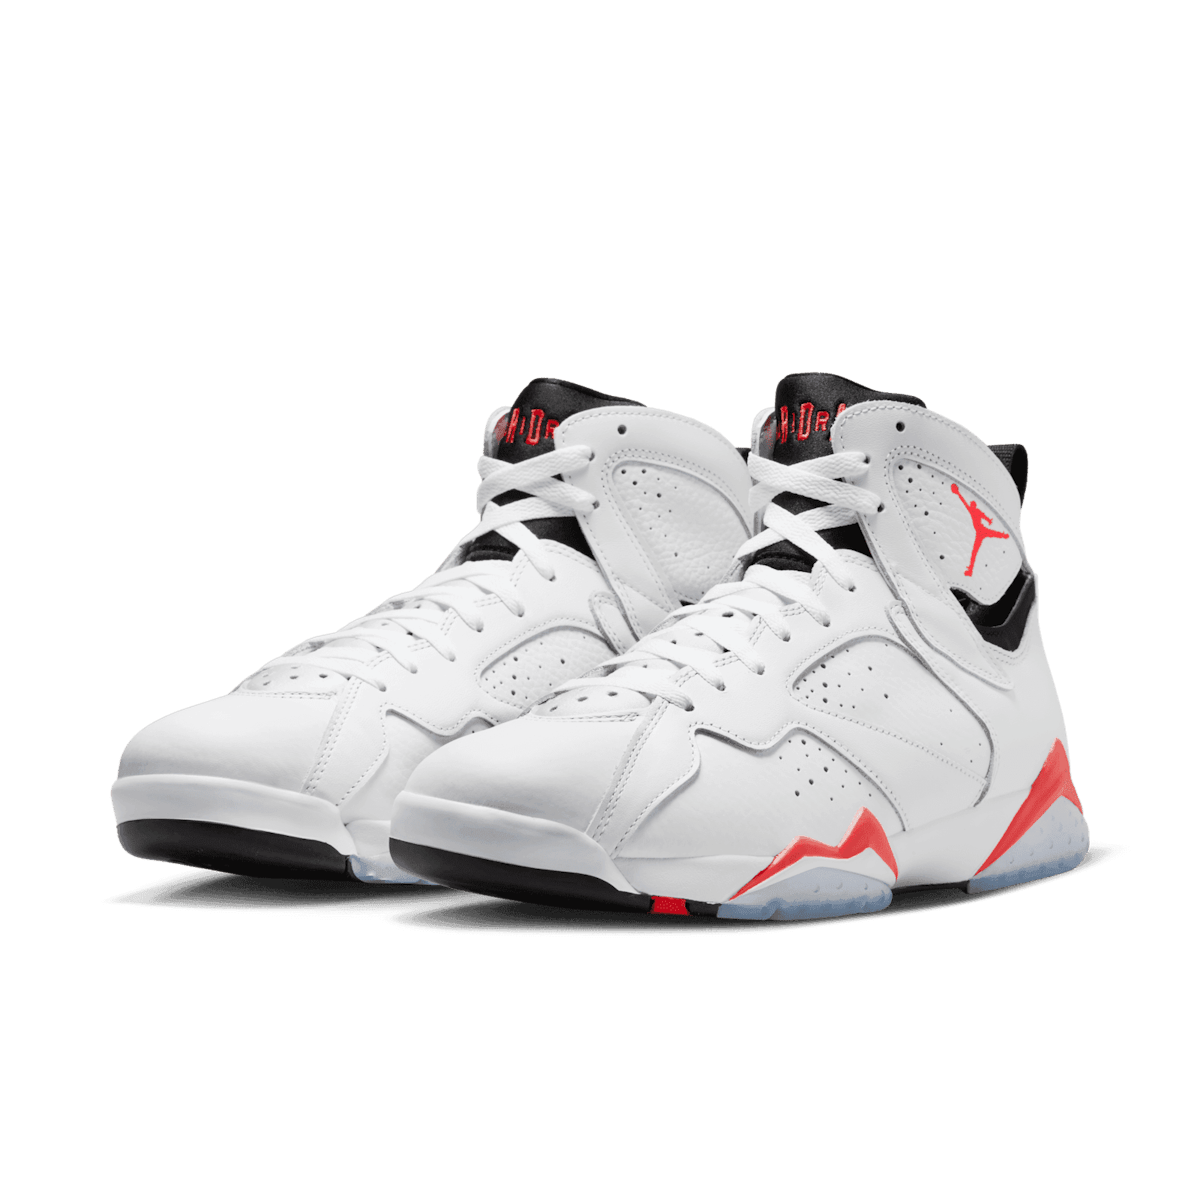 Air Jordan 7 Retro White Infrared Angle 2